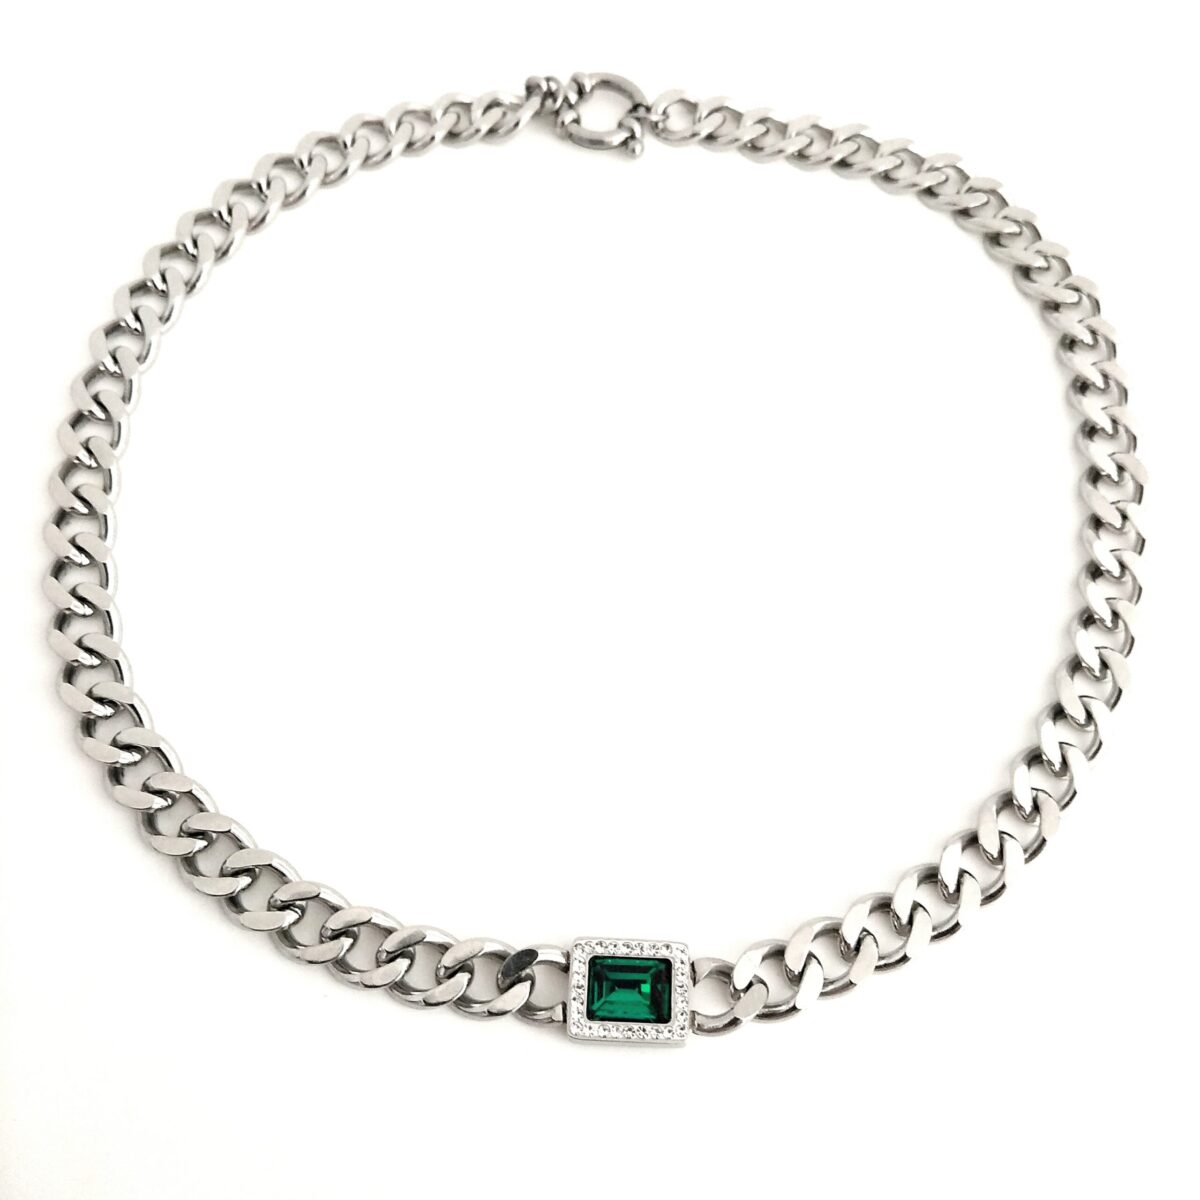 Scale Emerald Necklace